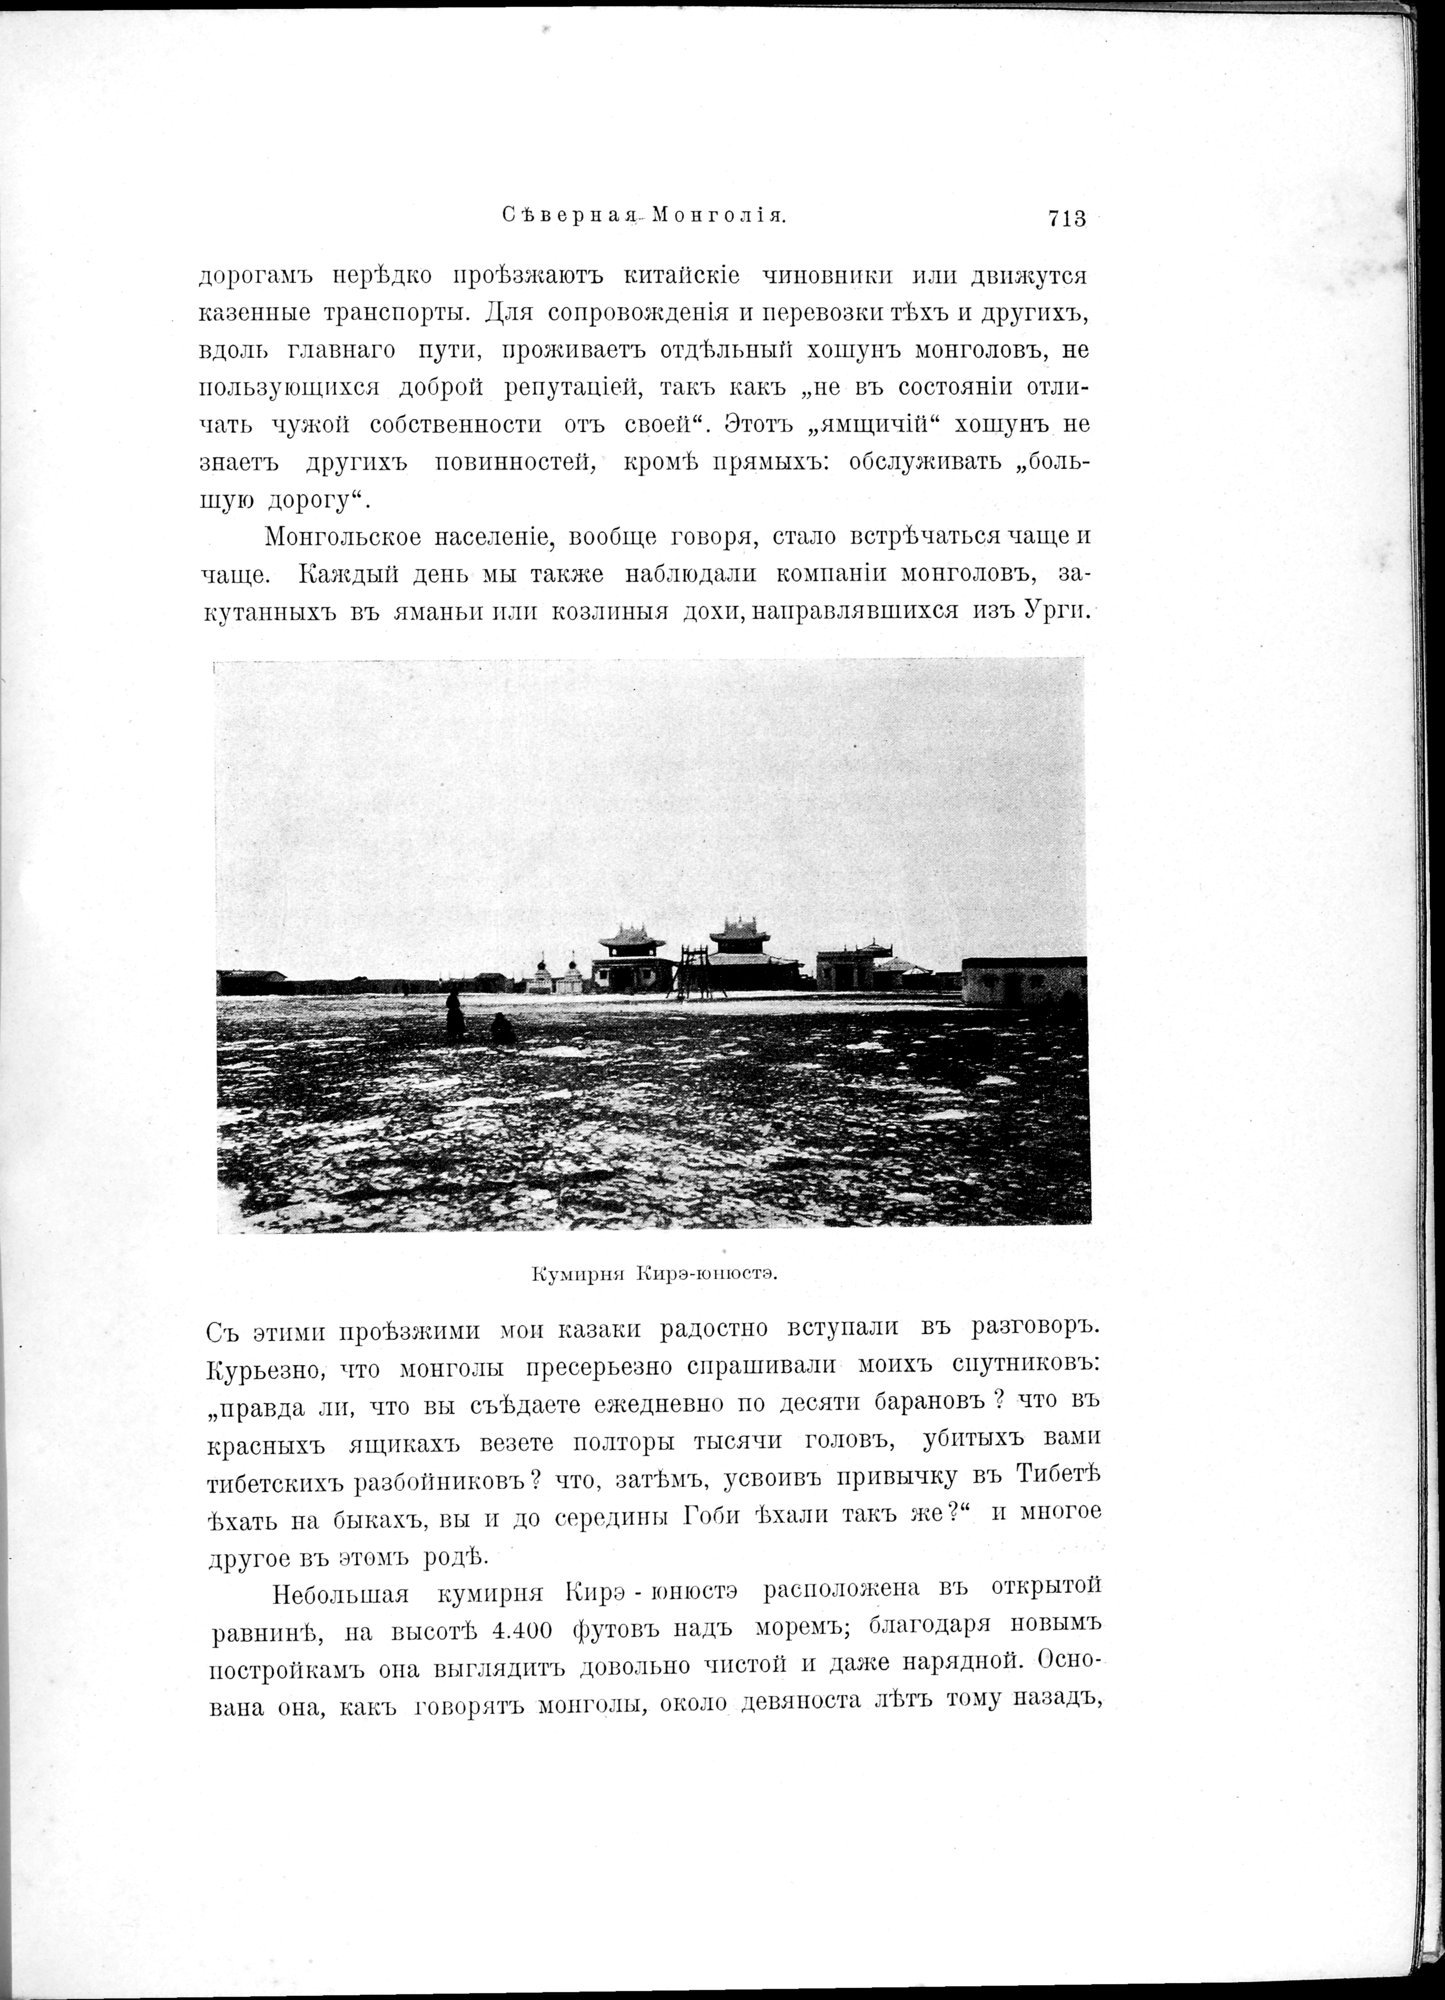 Mongoliia i Kam : vol.2 / Page 551 (Grayscale High Resolution Image)